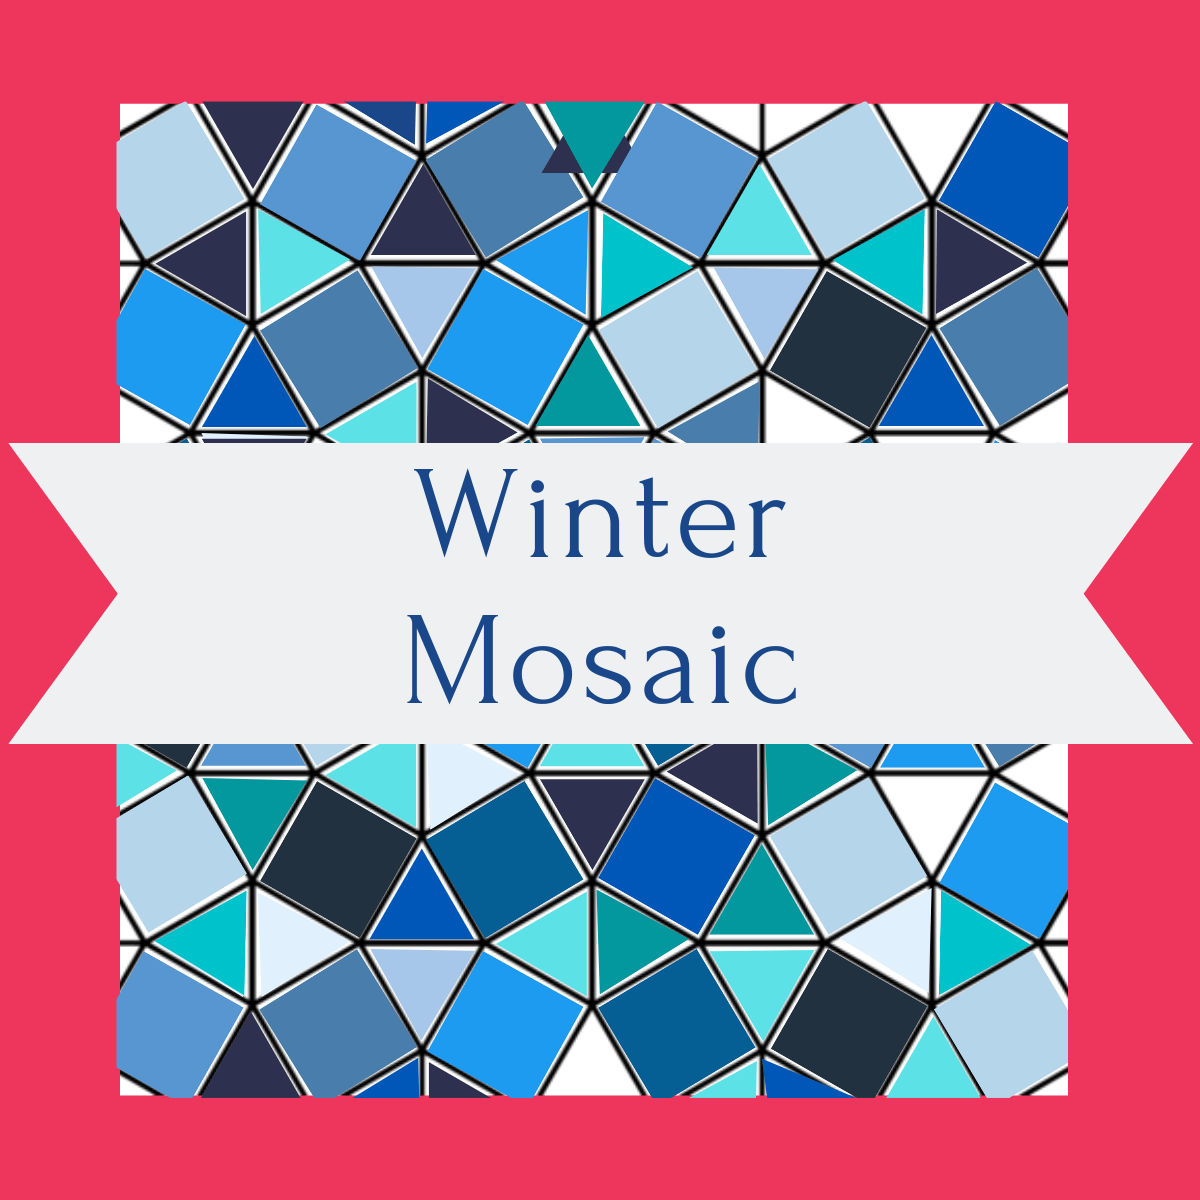 Winter Mosaic